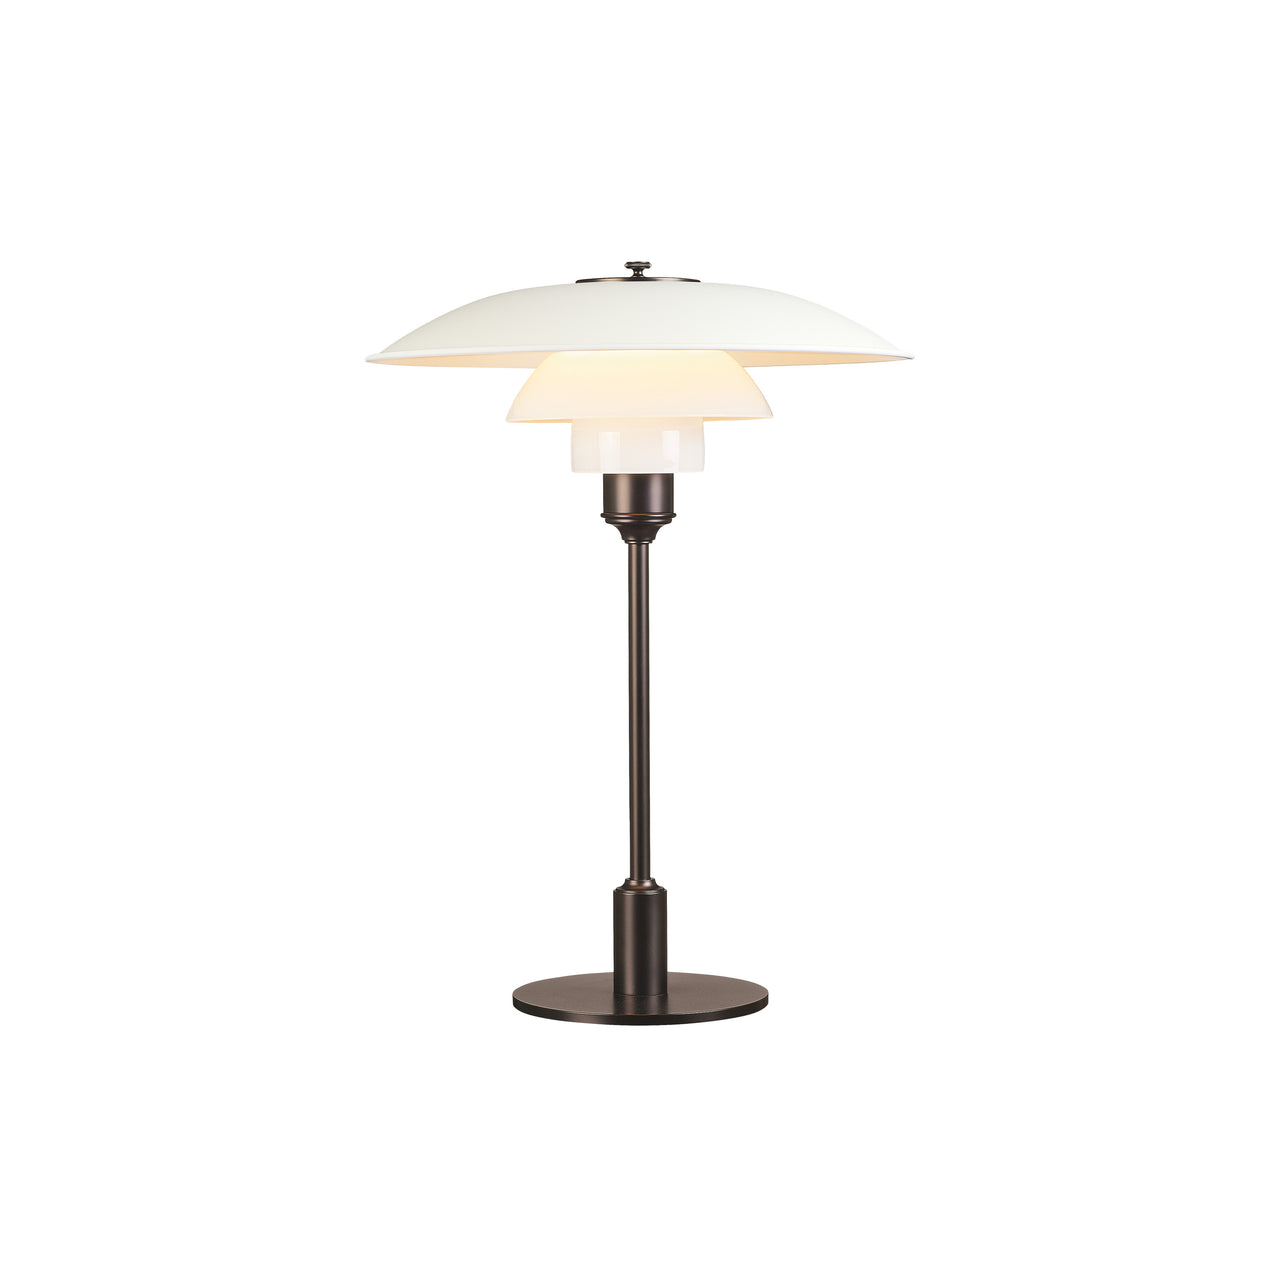 PH 3½-2½ Table Lamp: White